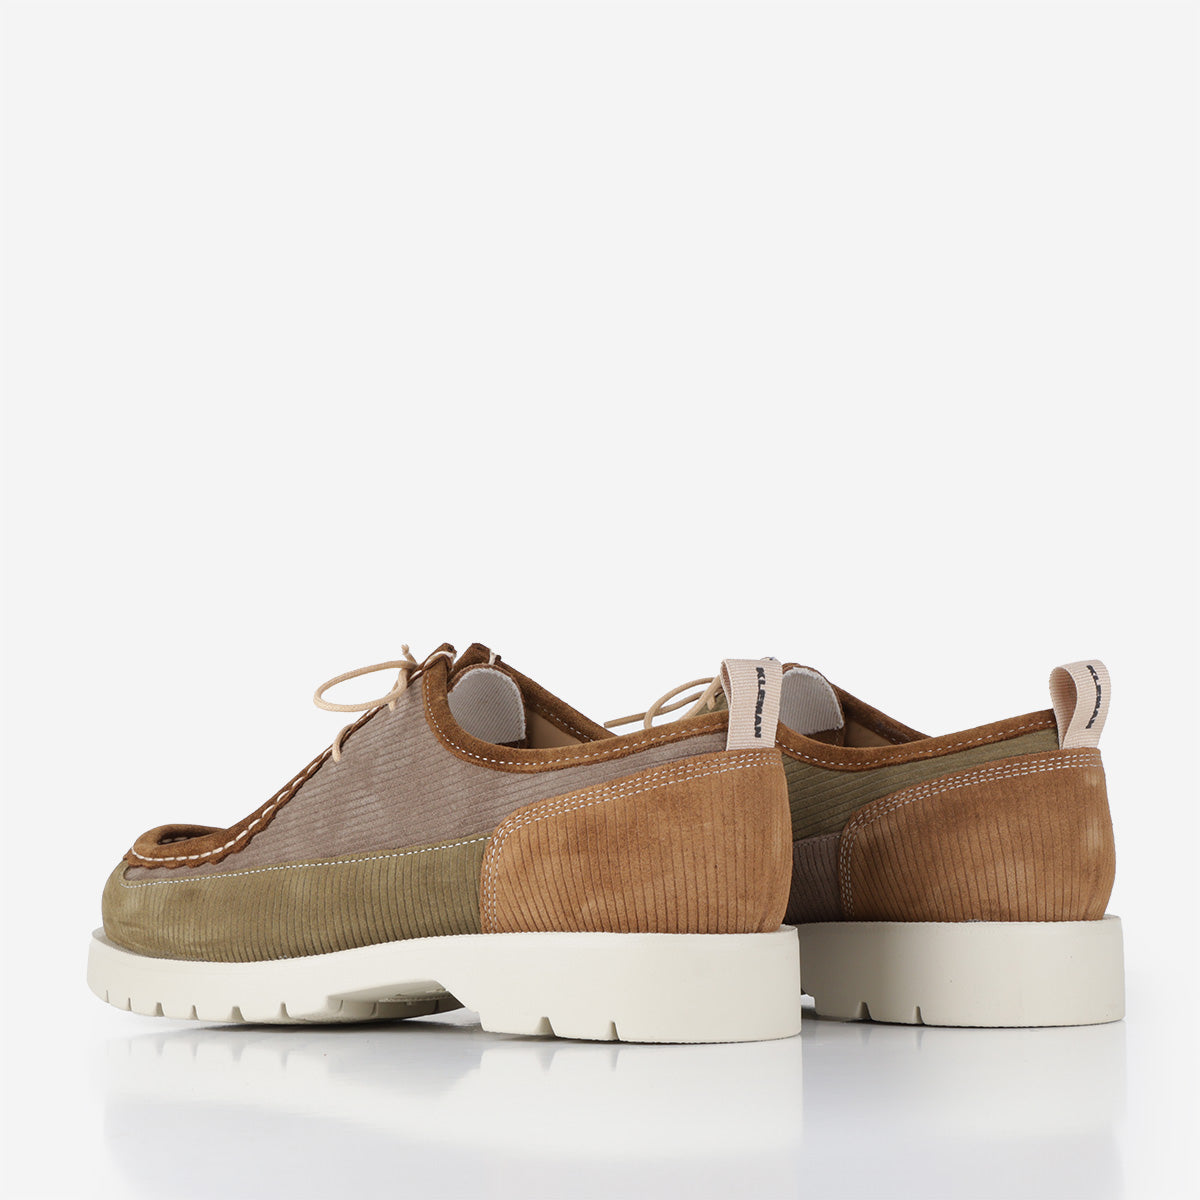 Kleman Bastille Cord Shoes, Khaki/Taupe/Brown, Detail Shot 3